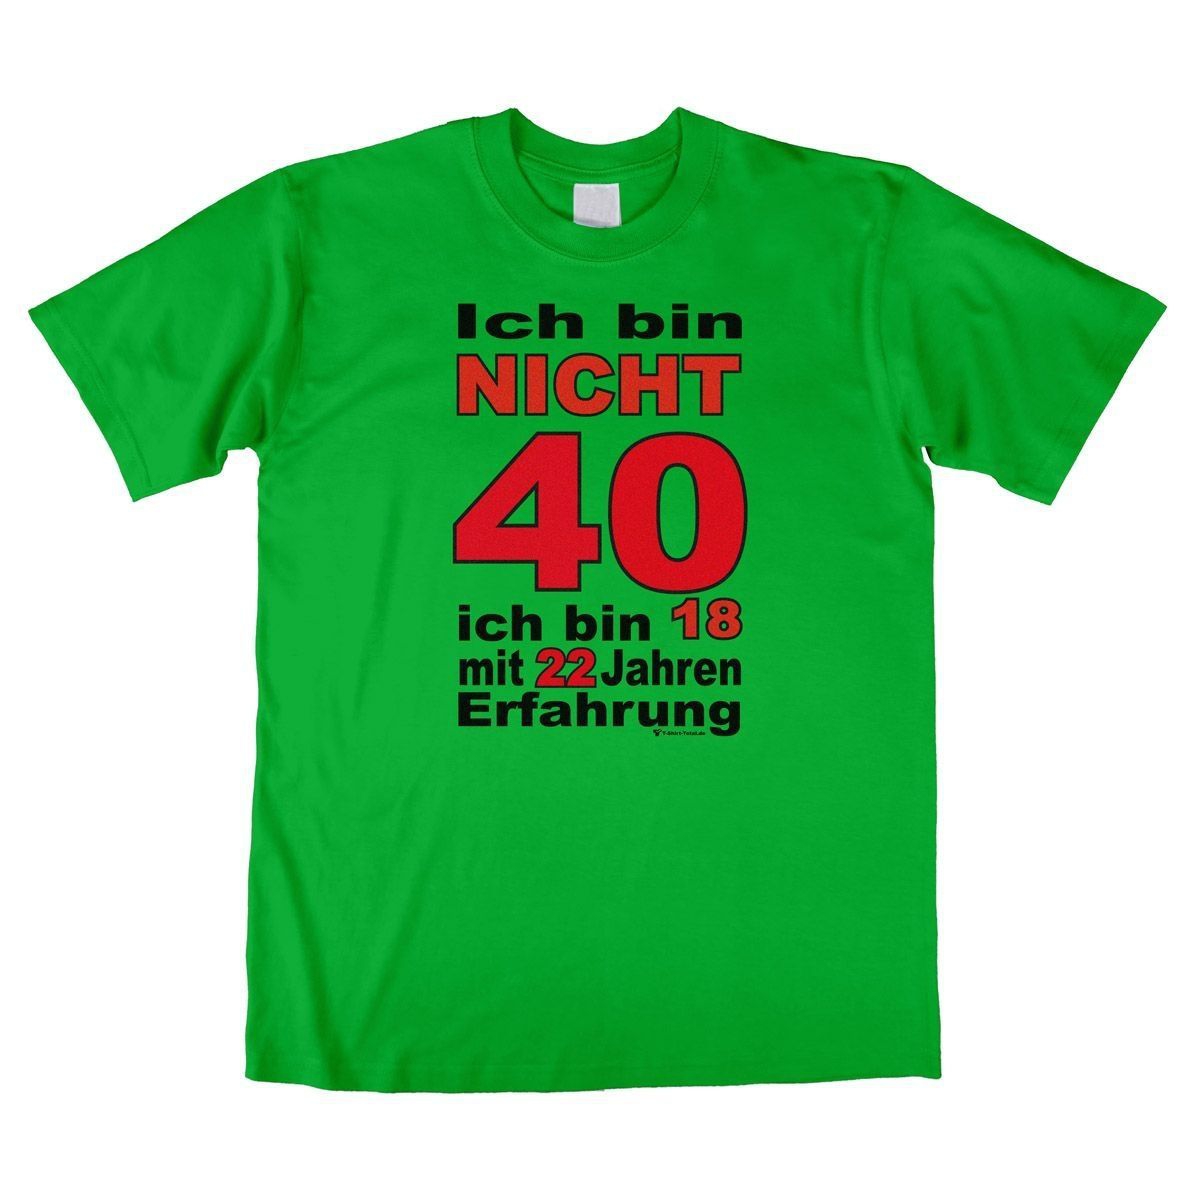 Bin nicht 40 Unisex T-Shirt grün Extra Large